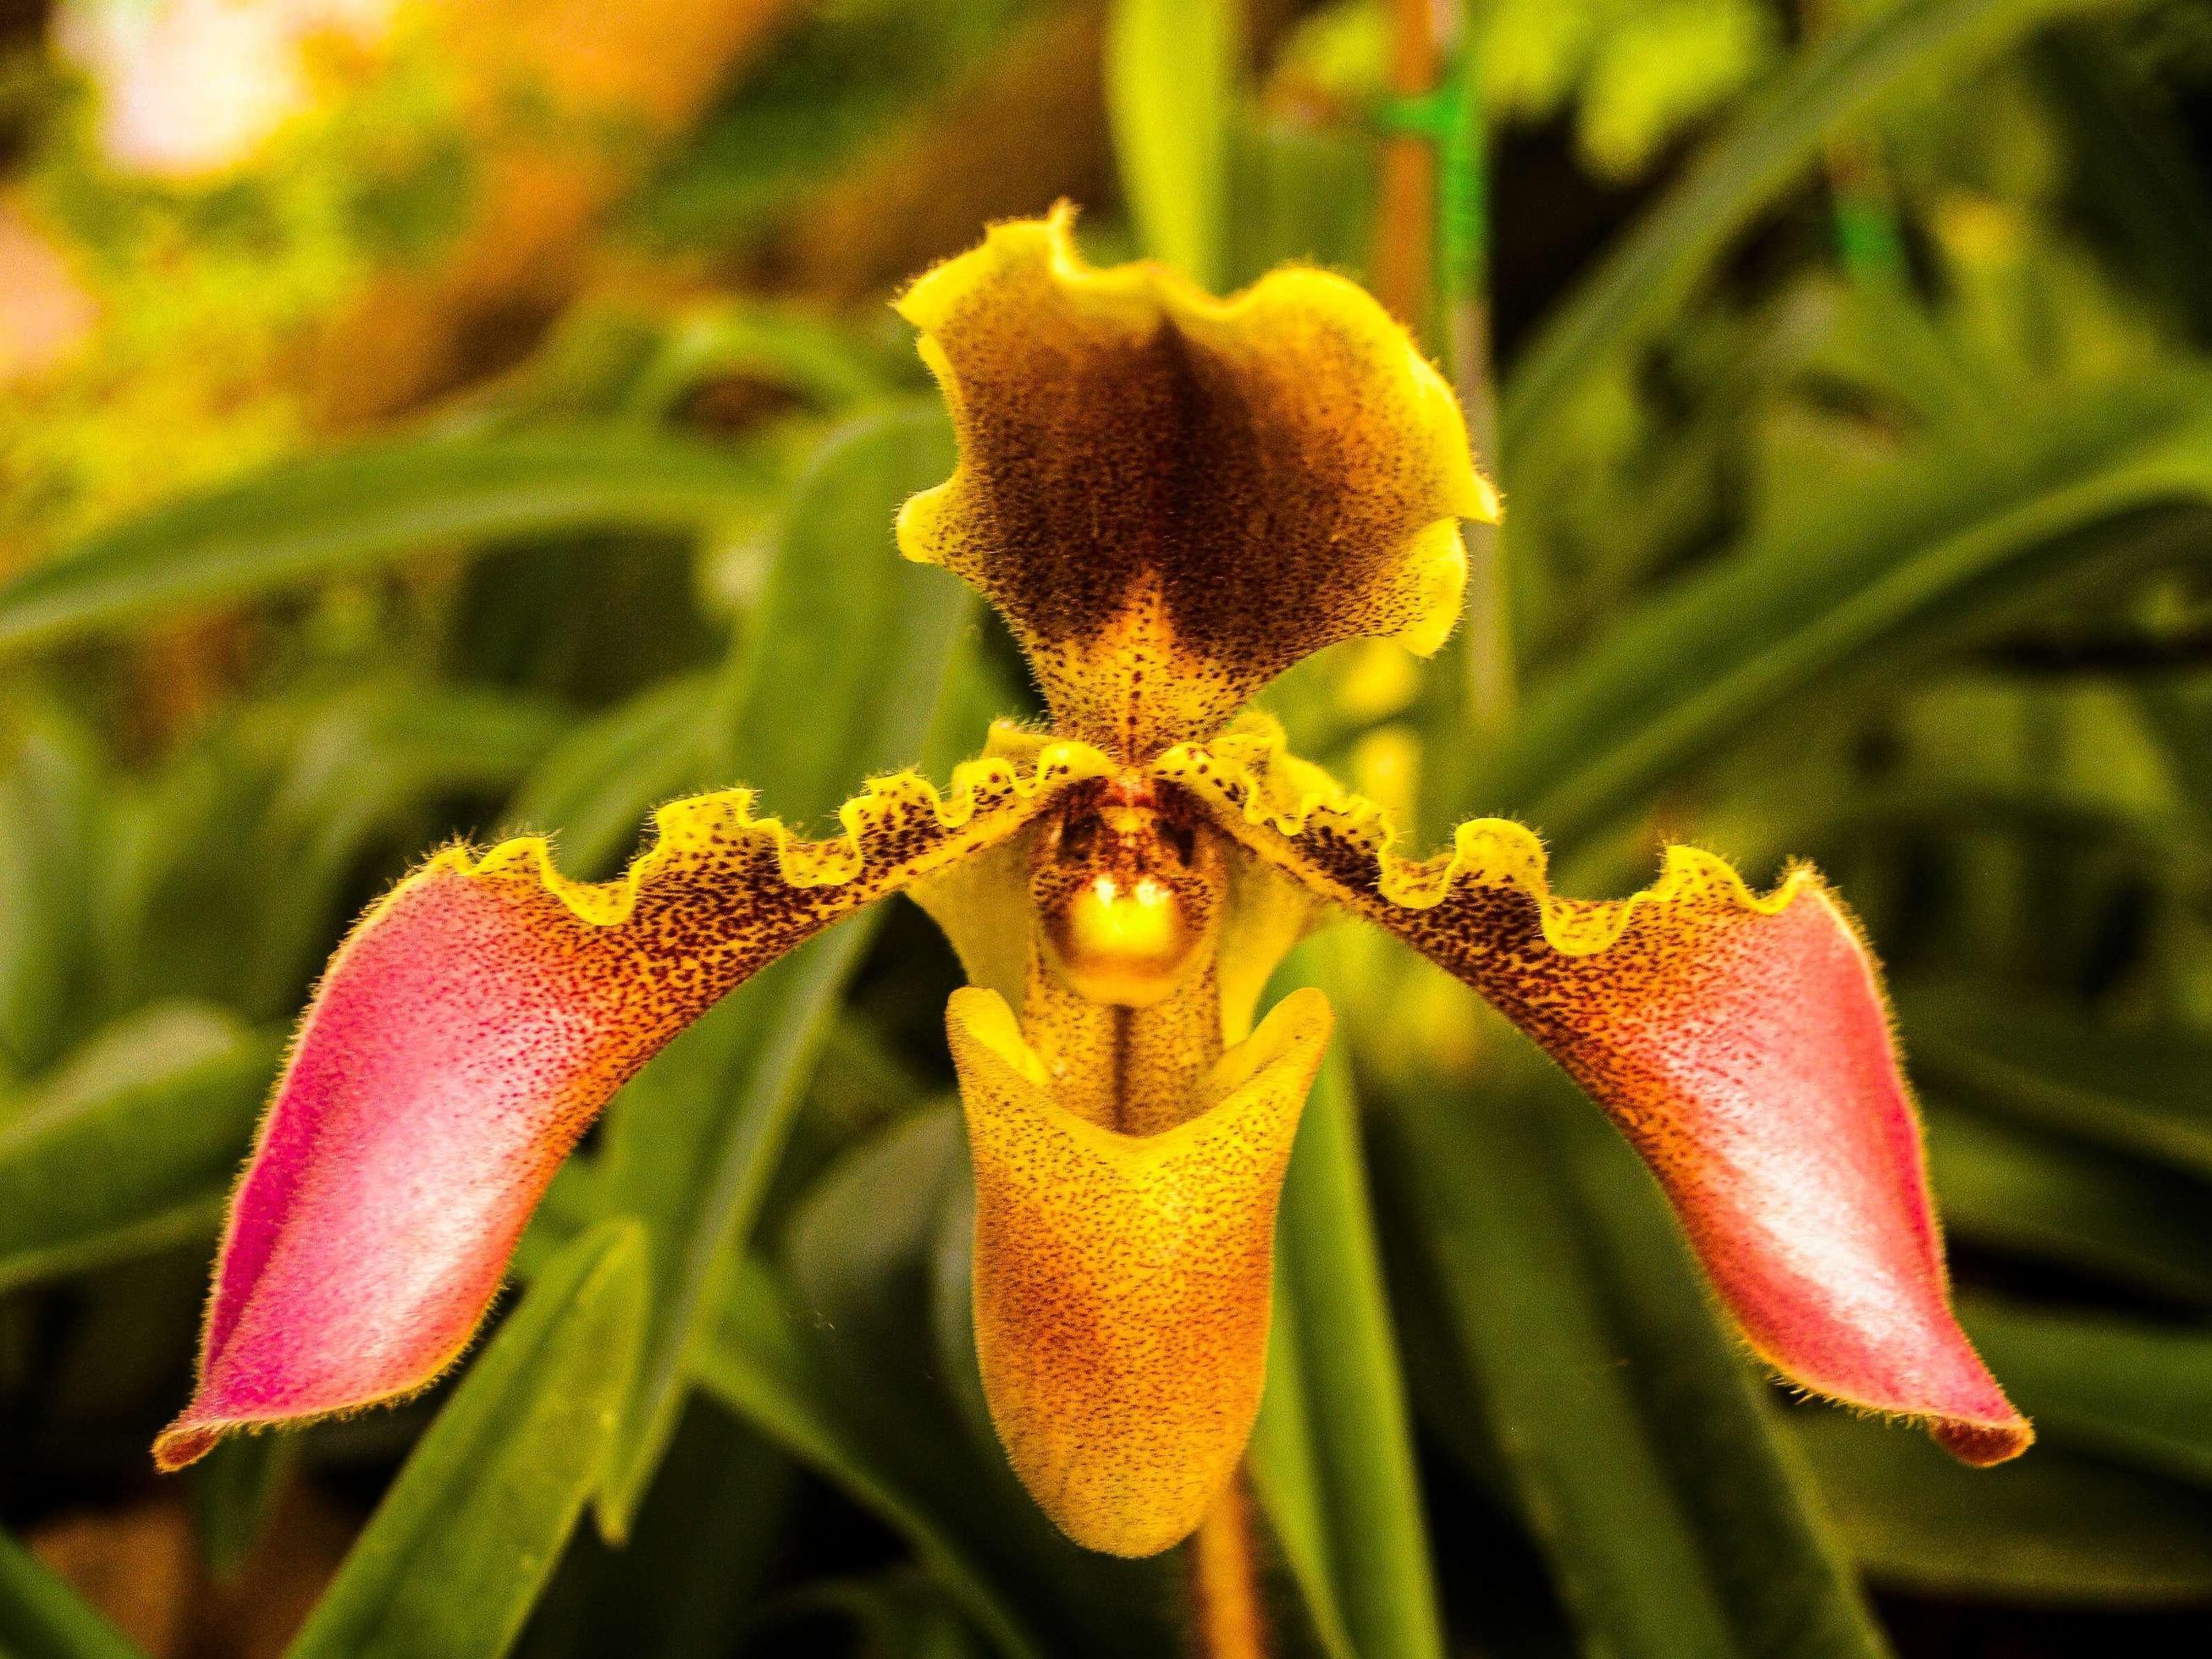 orquídea amarela e vermelha 2257517 Foto de stock no Vecteezy